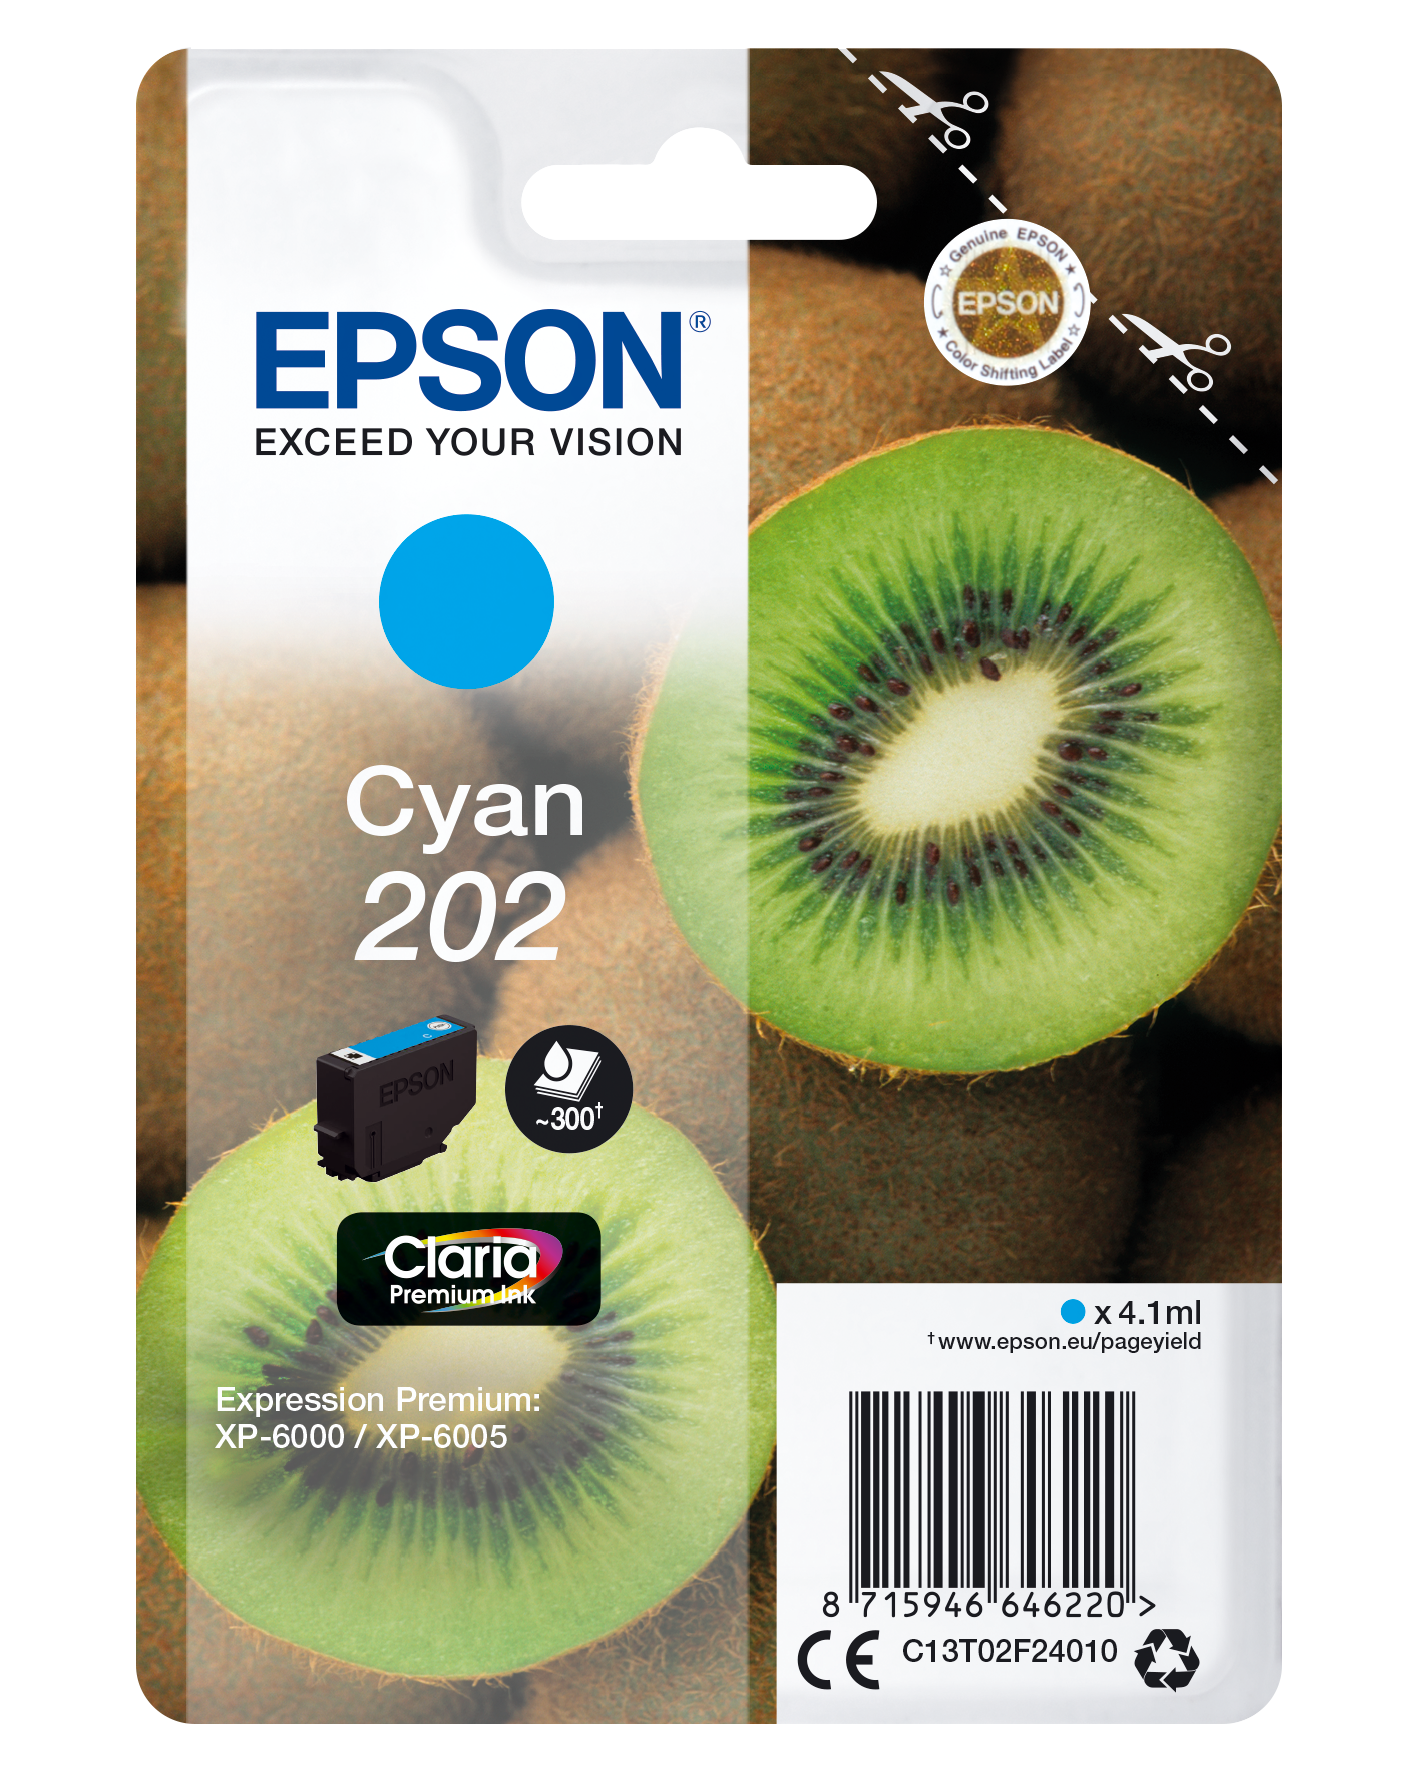 Epson Kiwi Singlepack Cyan 202 Claria Premium Ink single pack / cyaan